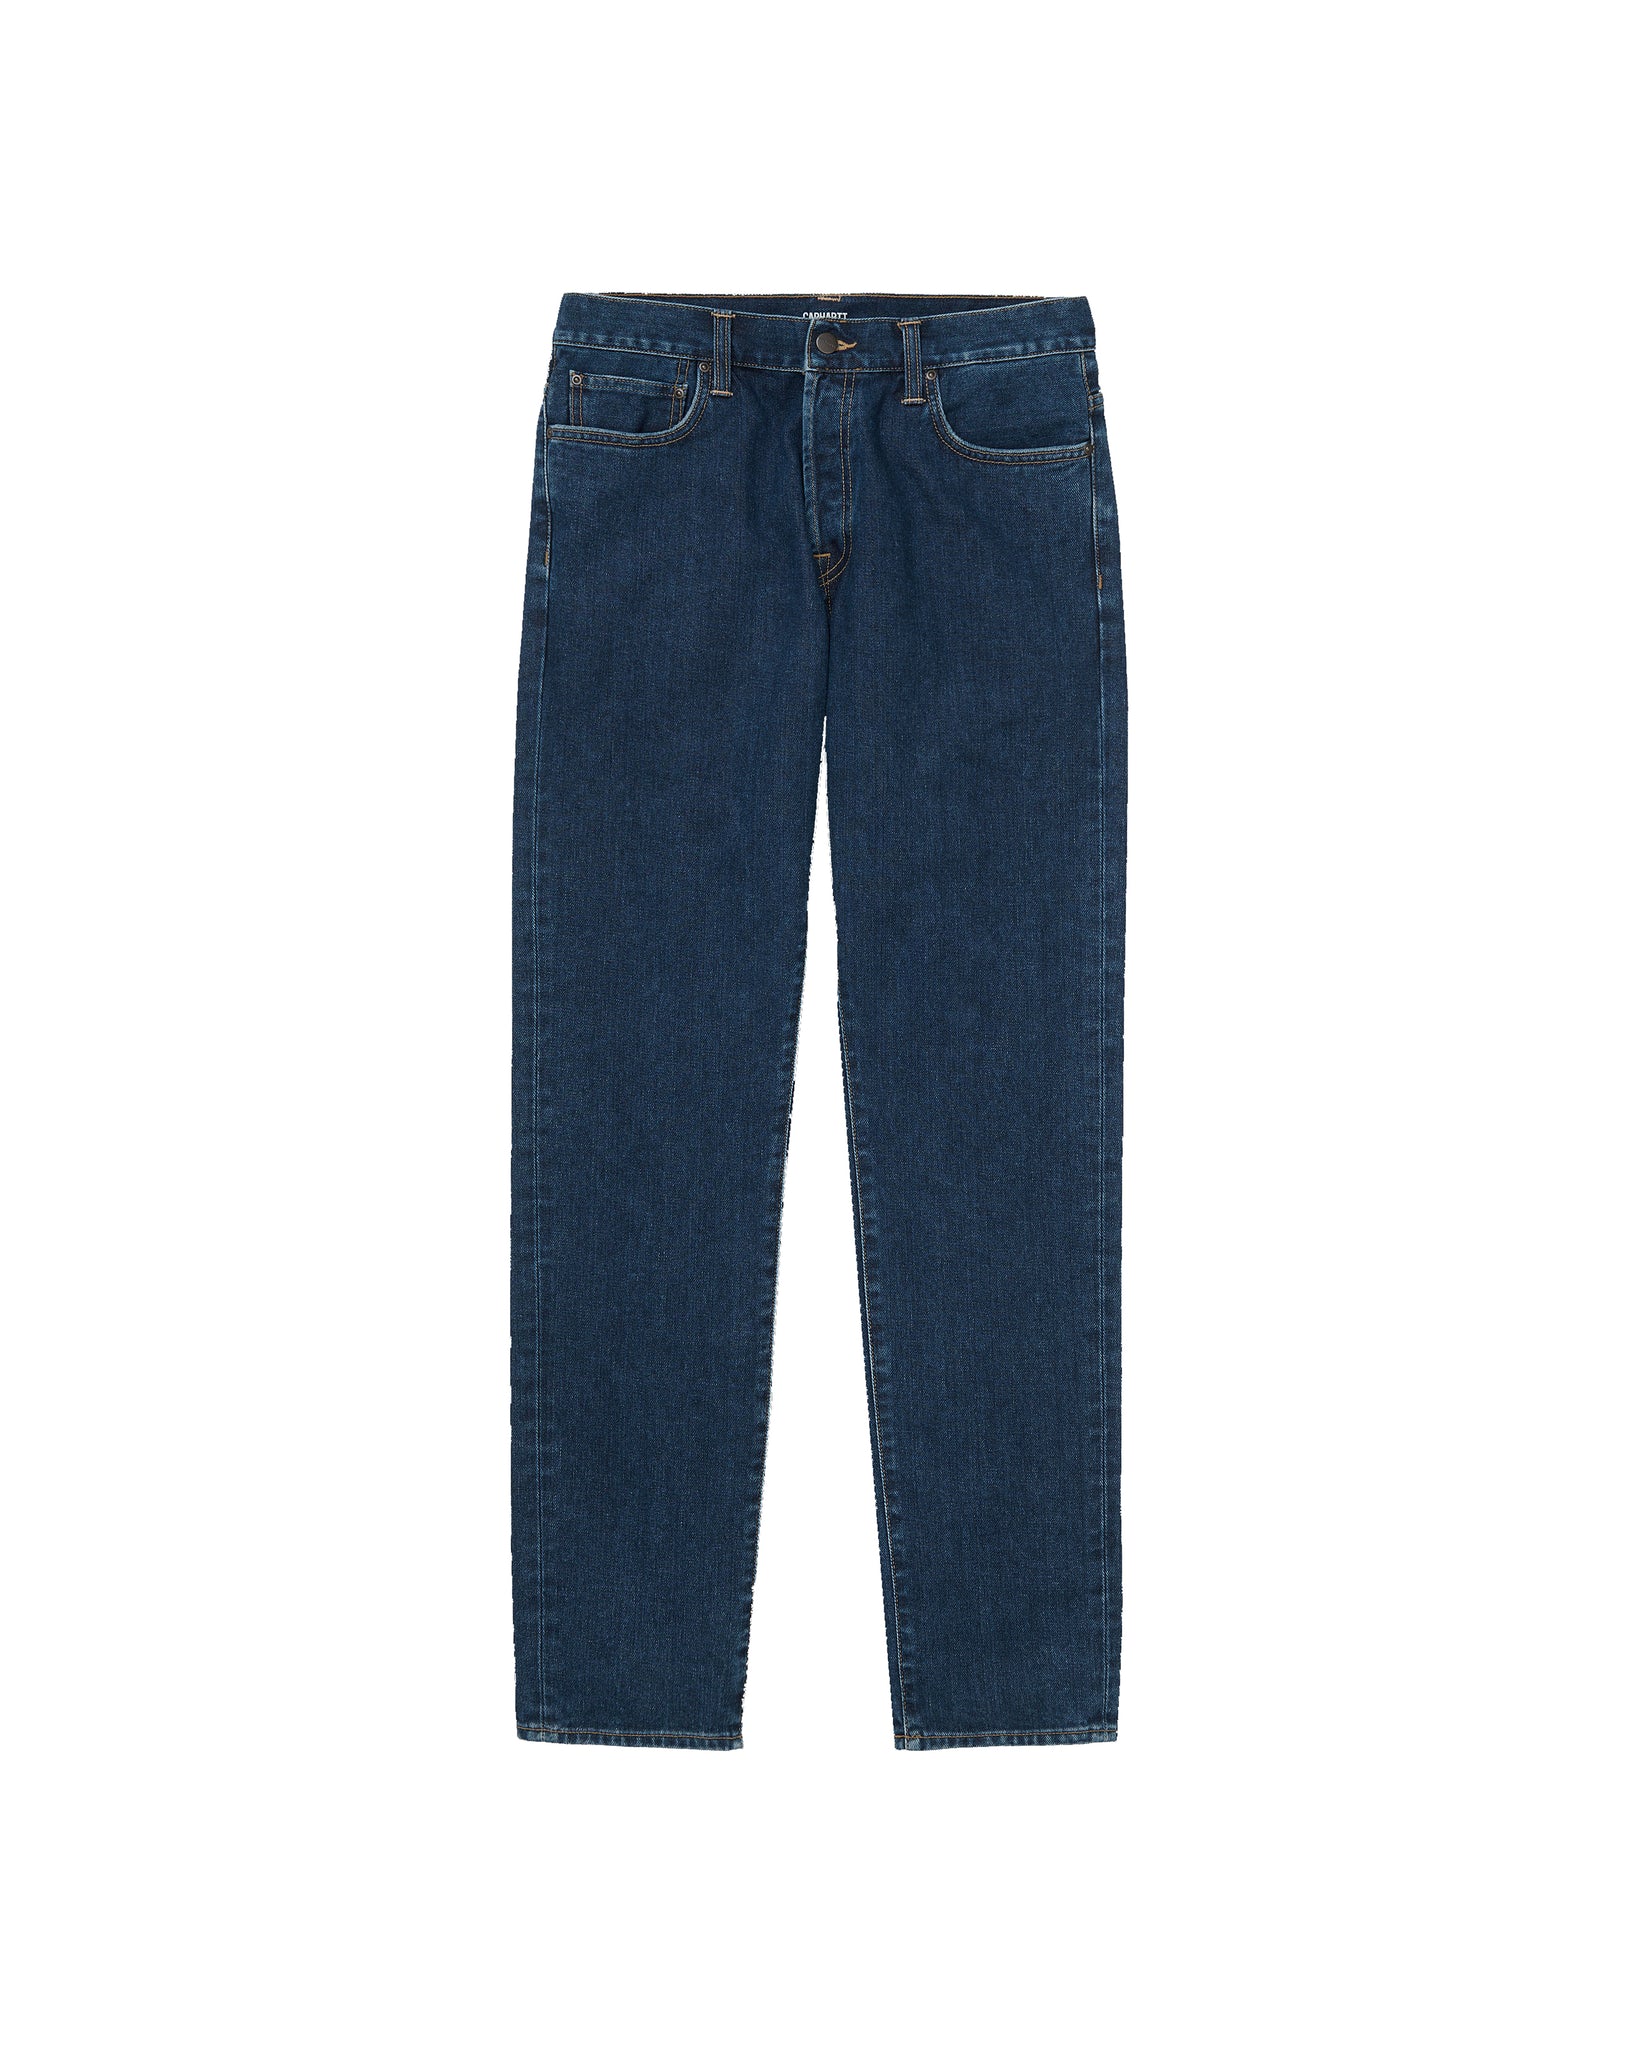 Klondike jeans - Blue (Stone washed)